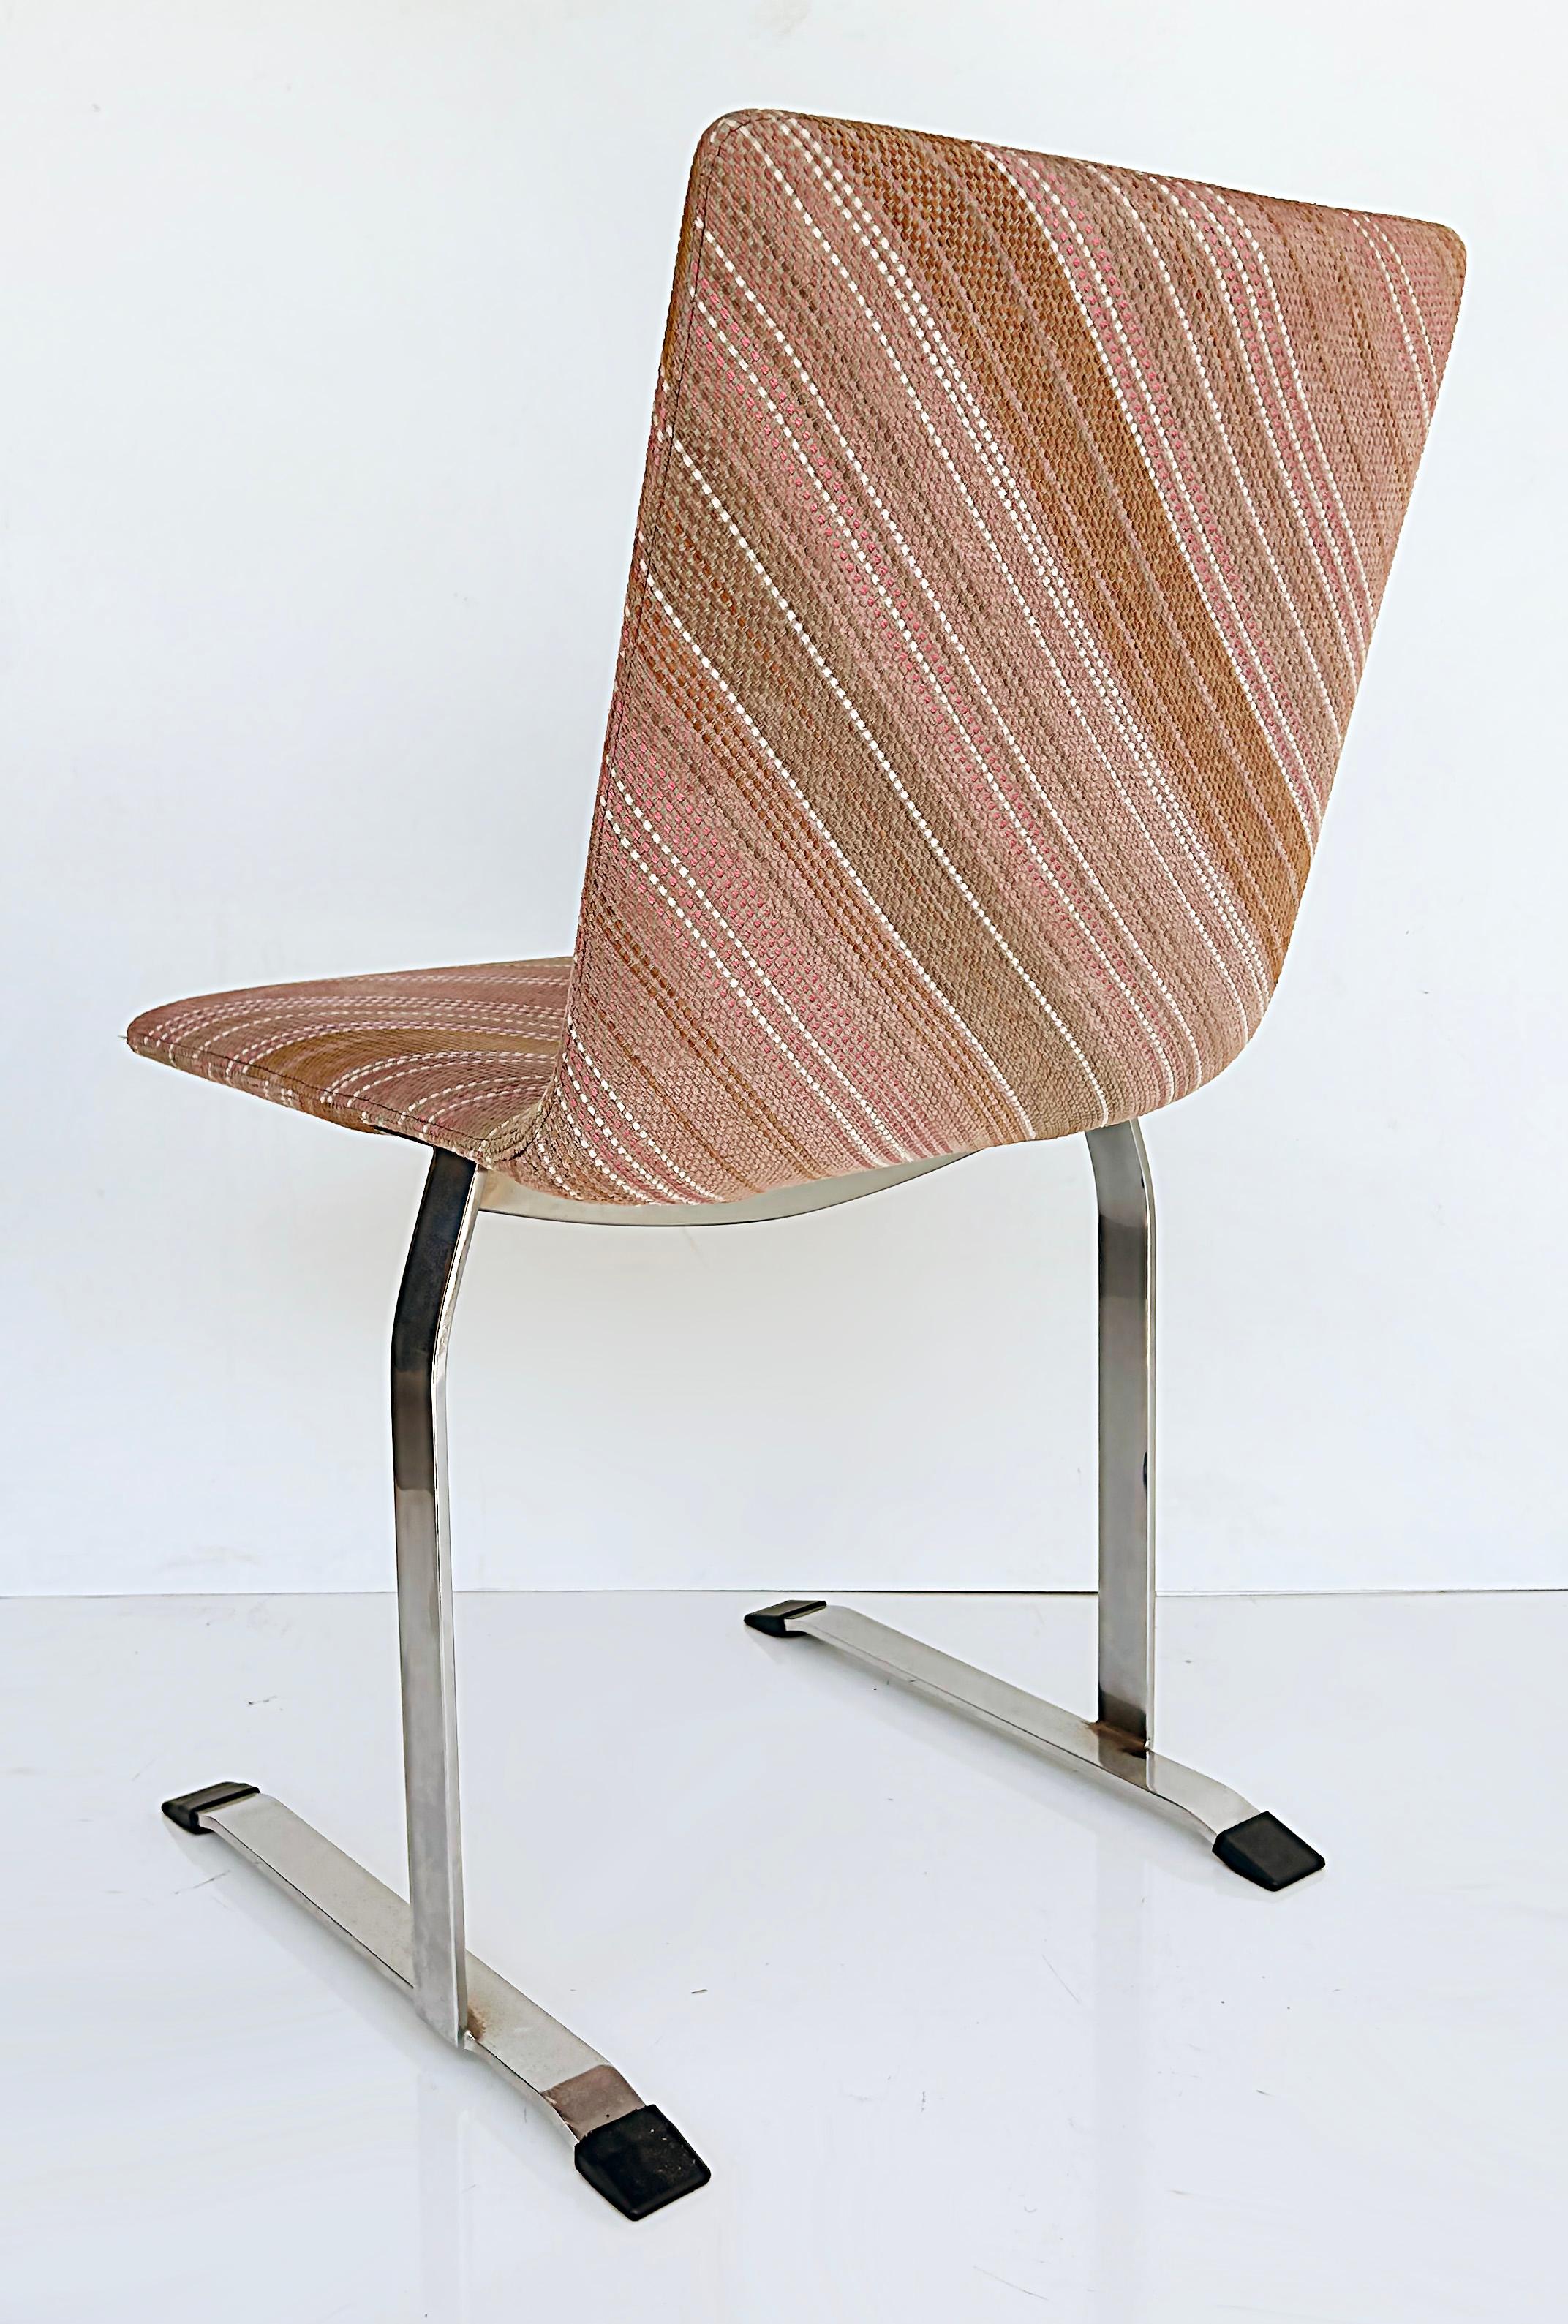 20th Century Vintage Saporiti Italia Stainless Steel Dining Chairs, Set of 4, Original Fabric